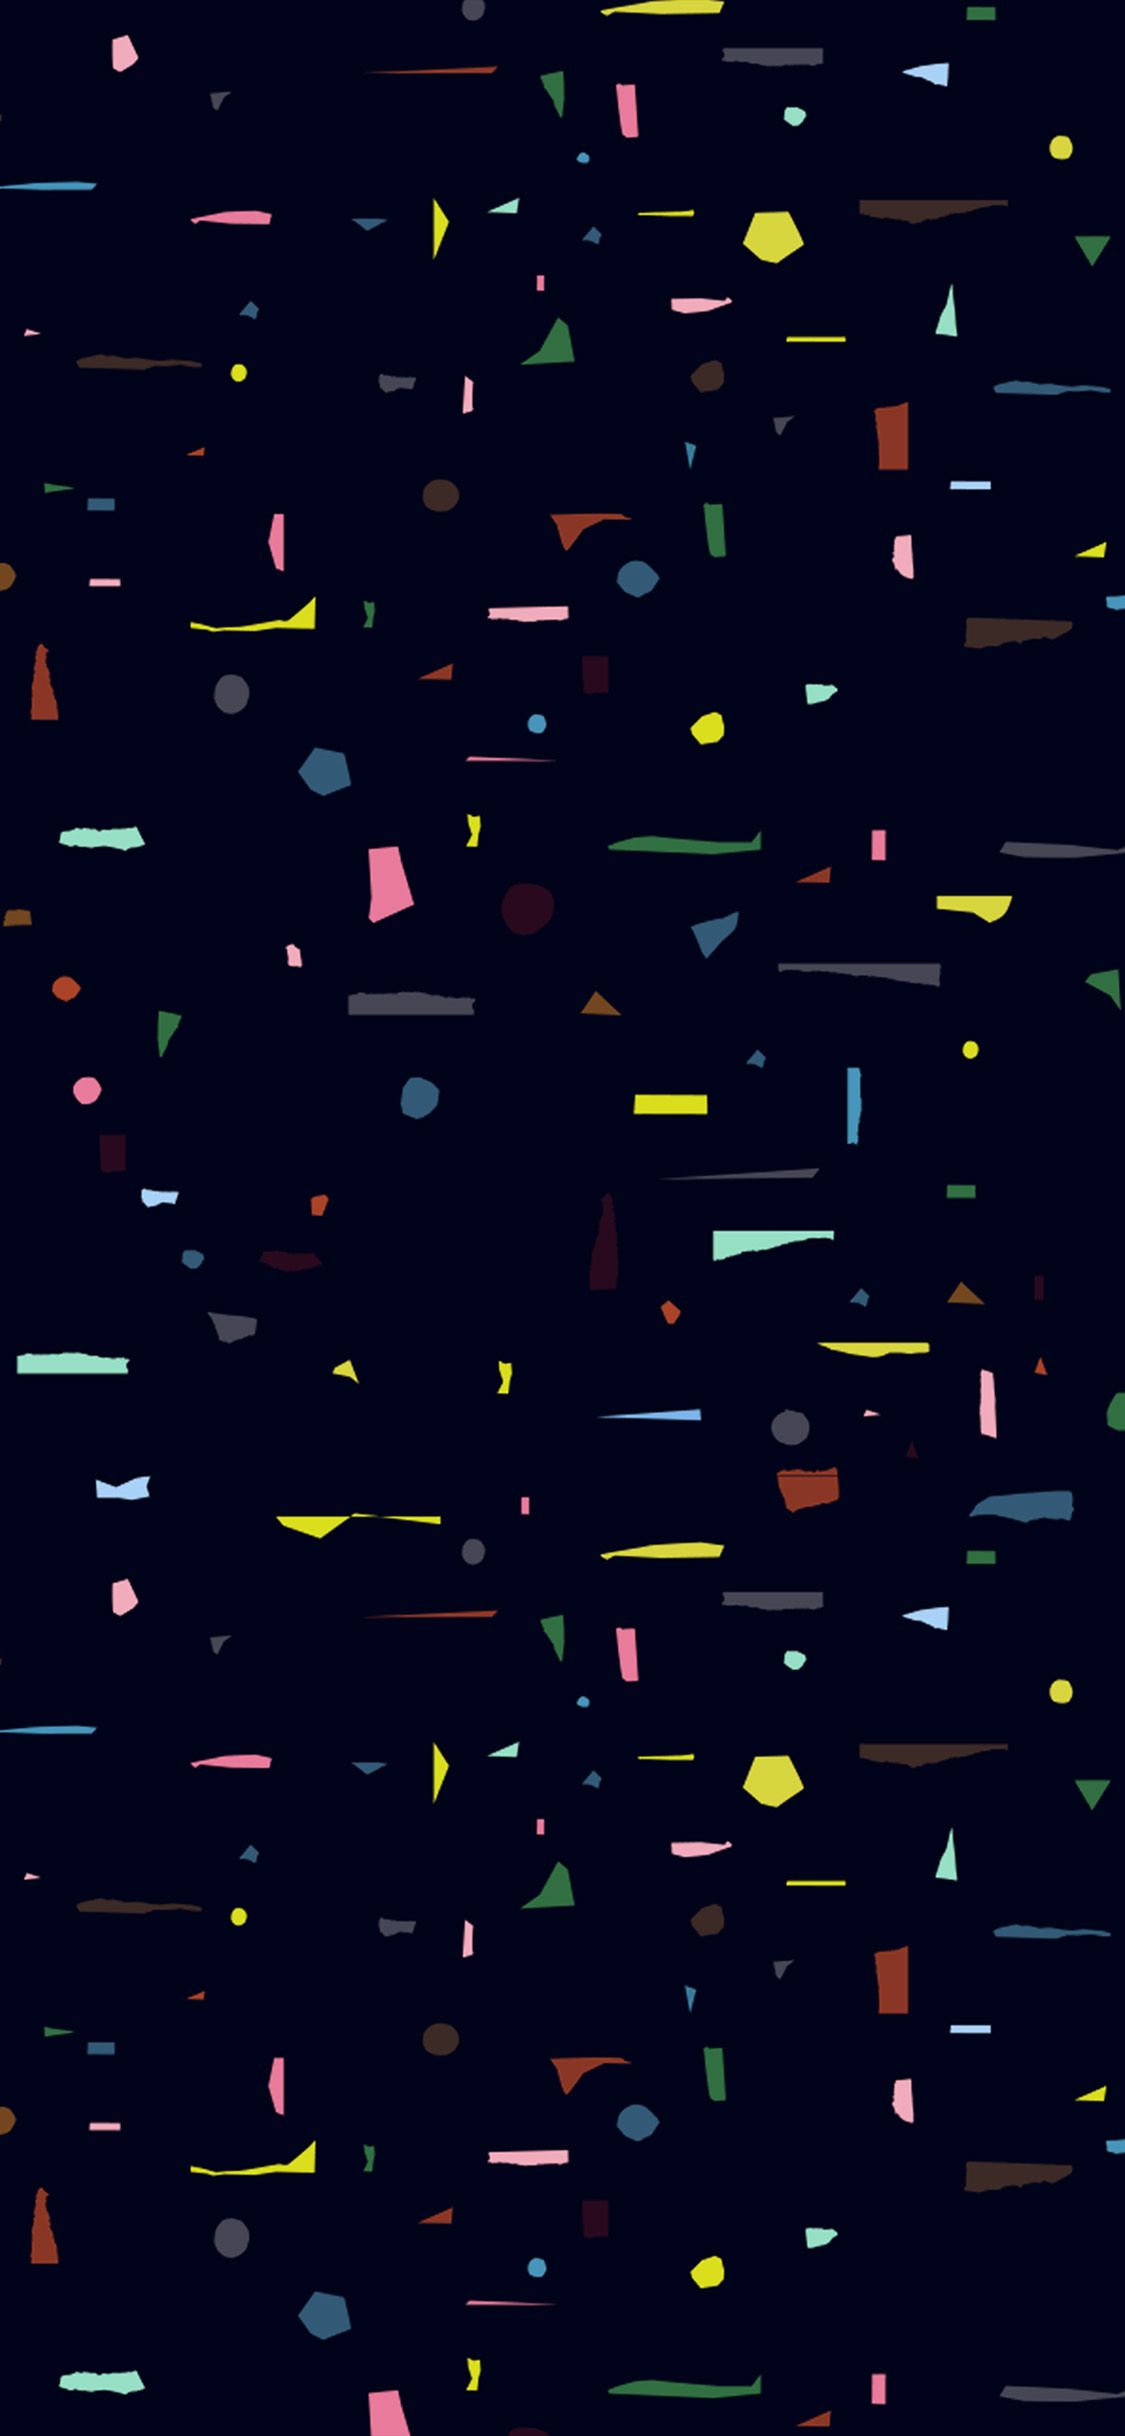 iPhone X wallpaper. simple dark pattern background